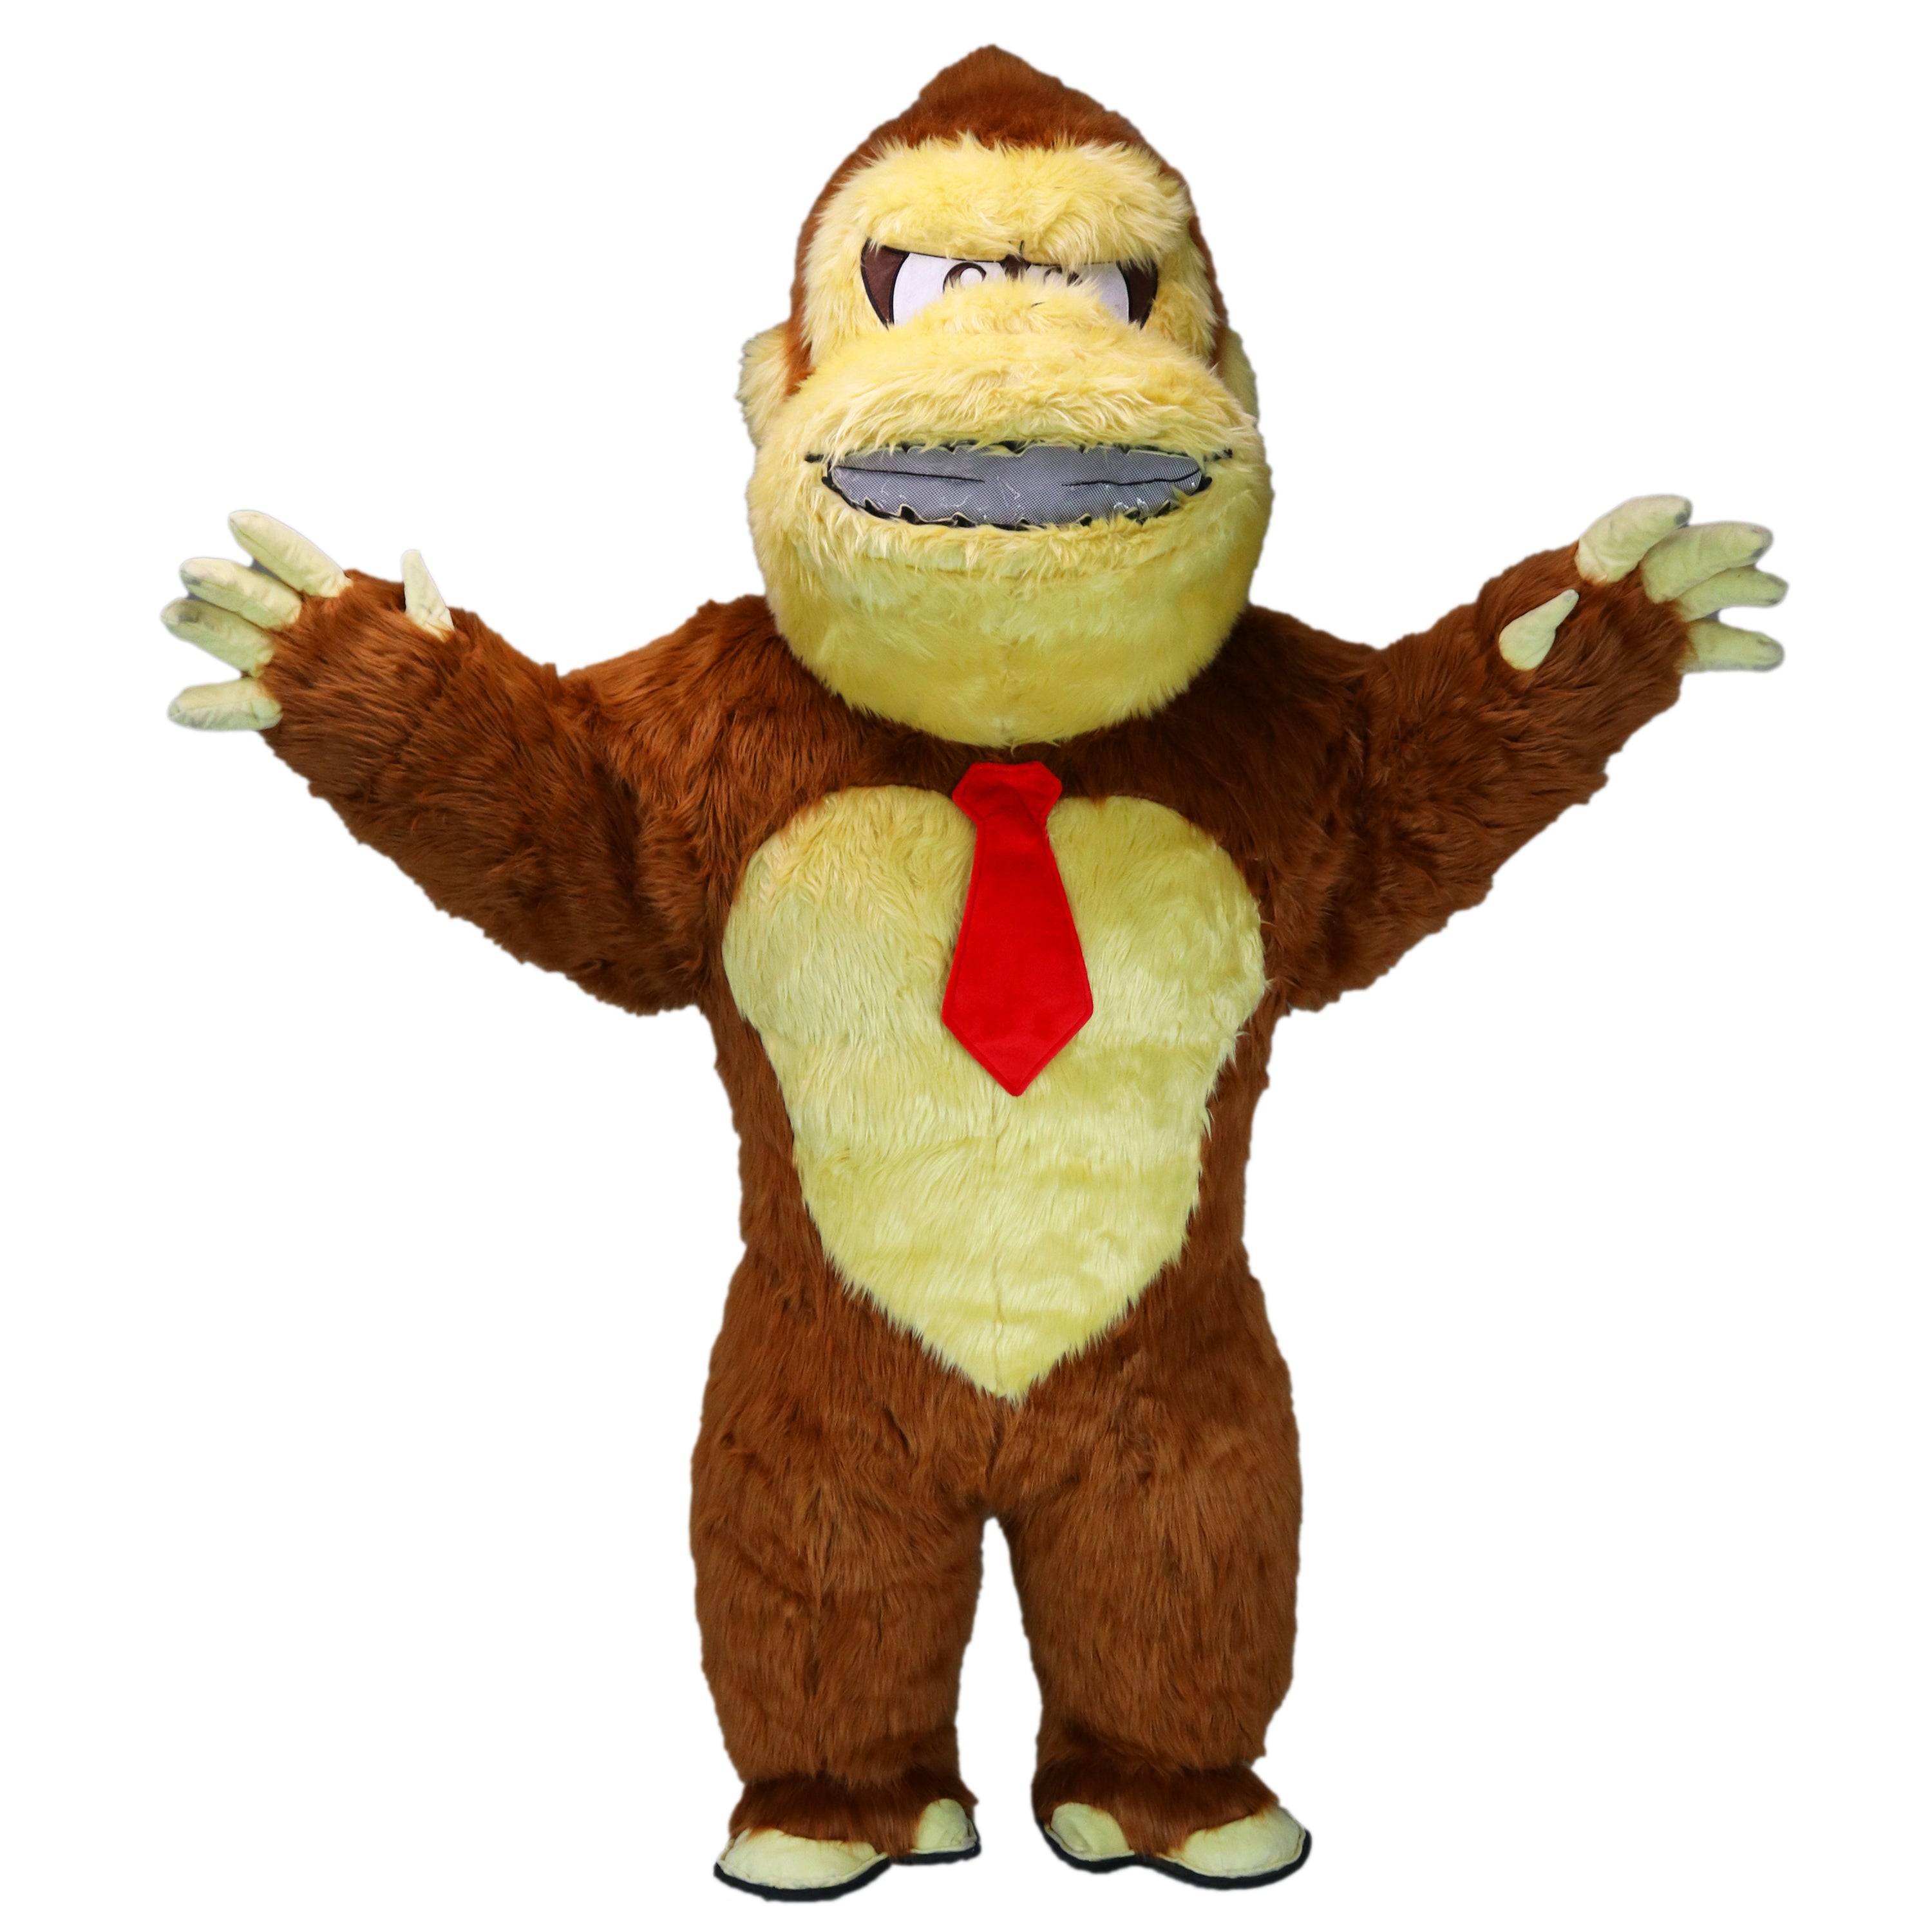 Giant Inflatable Ape Costume - Premium Chub Suit®